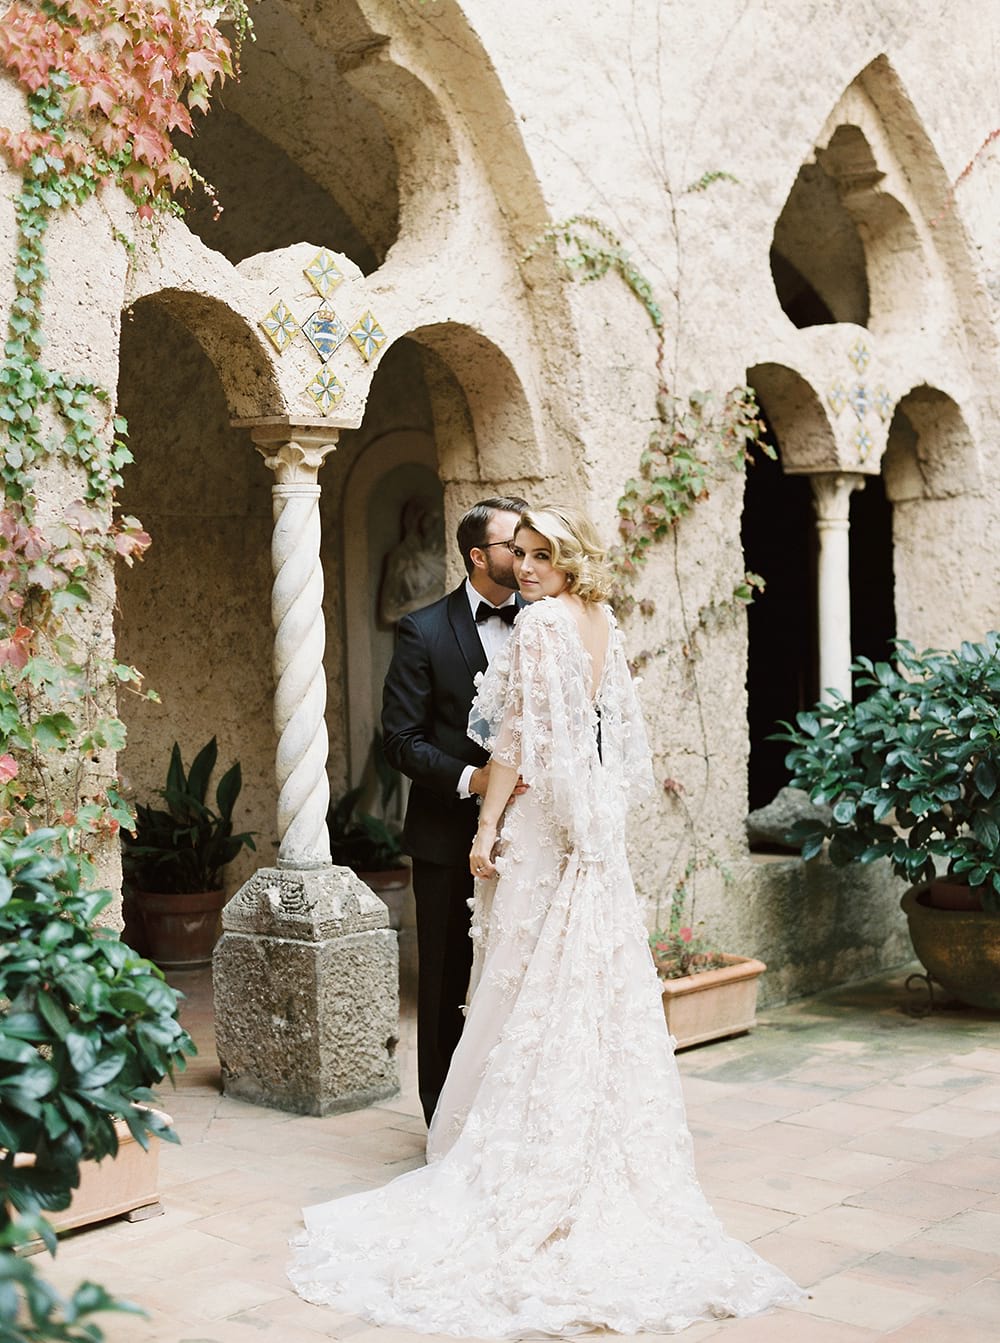 wedding villa cimbrone ravello, italy bride and groom first look photos